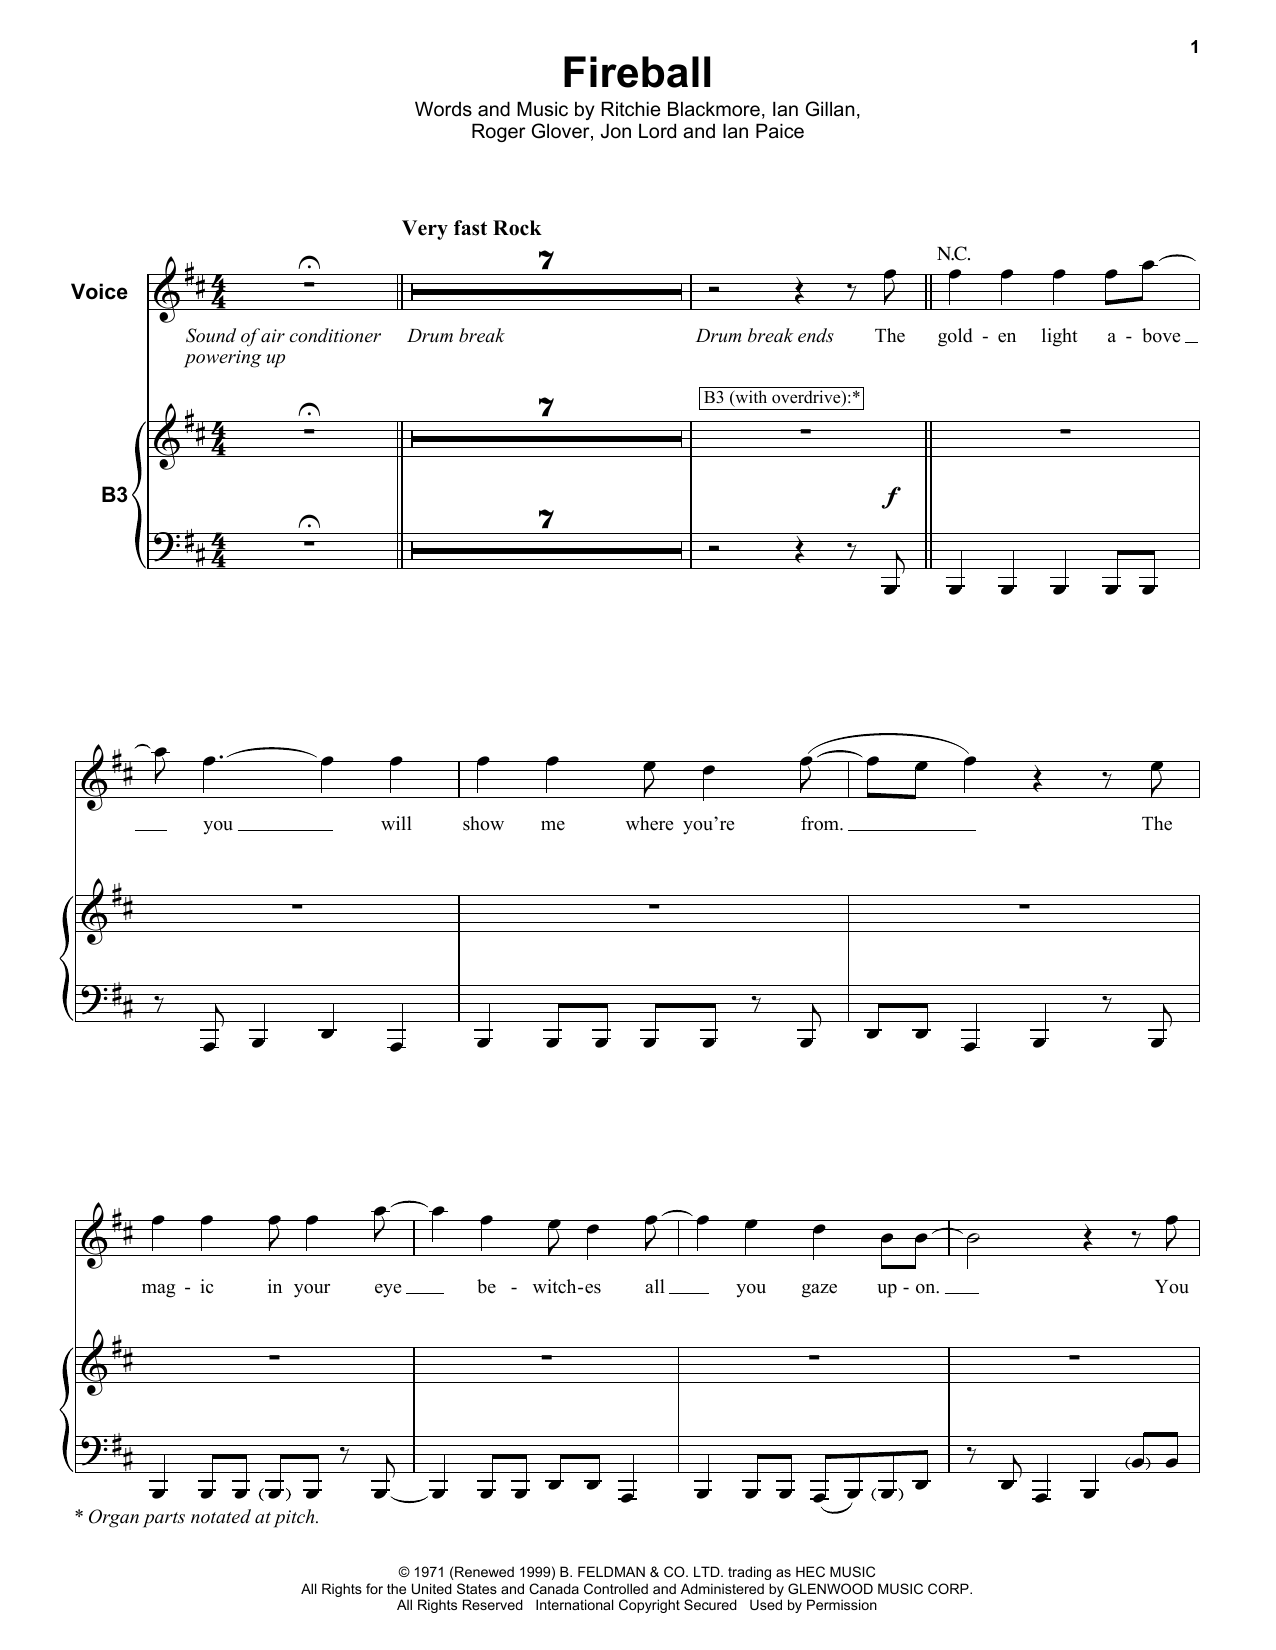 Deep Purple Fireball Sheet Music Notes & Chords for Keyboard Transcription - Download or Print PDF